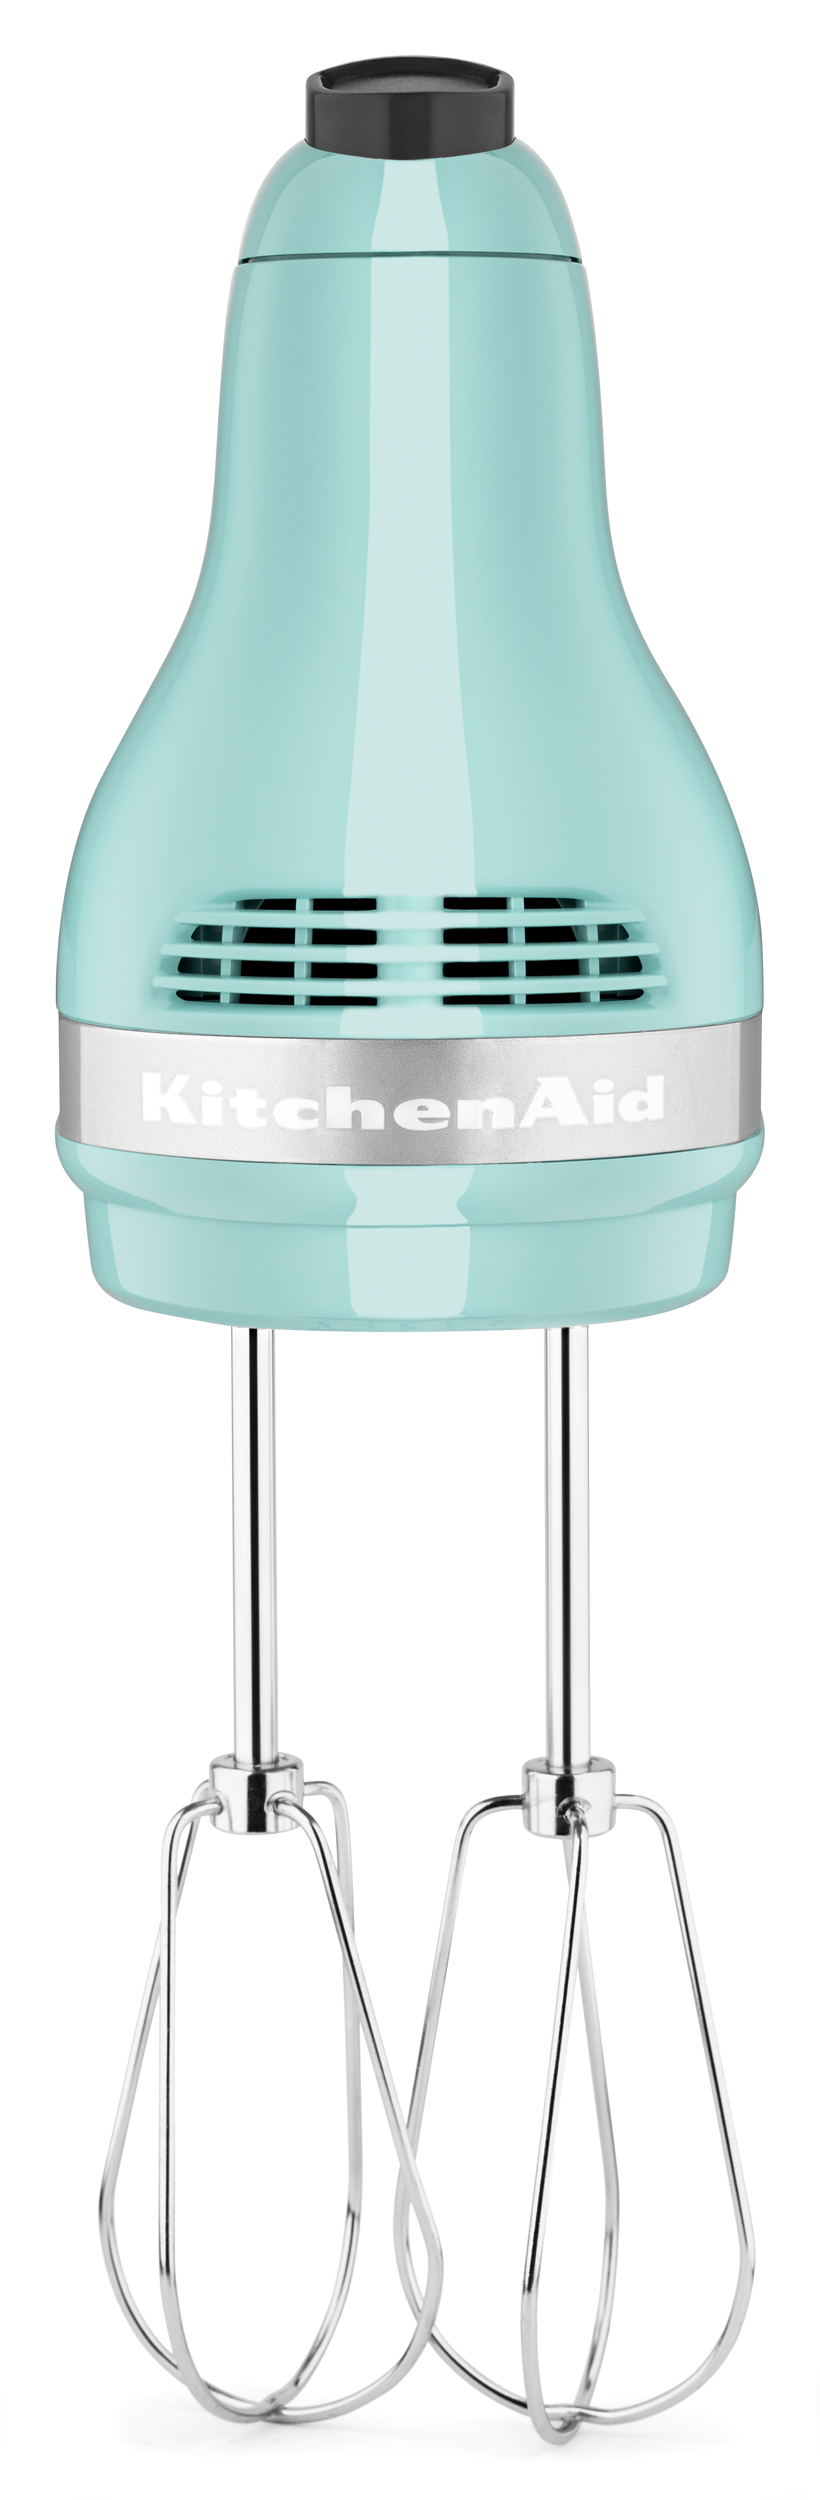 KitchenAid 5 Ultra Power Speed Hand Mixer - KHM512, Aqua Sky - image 3 of 5